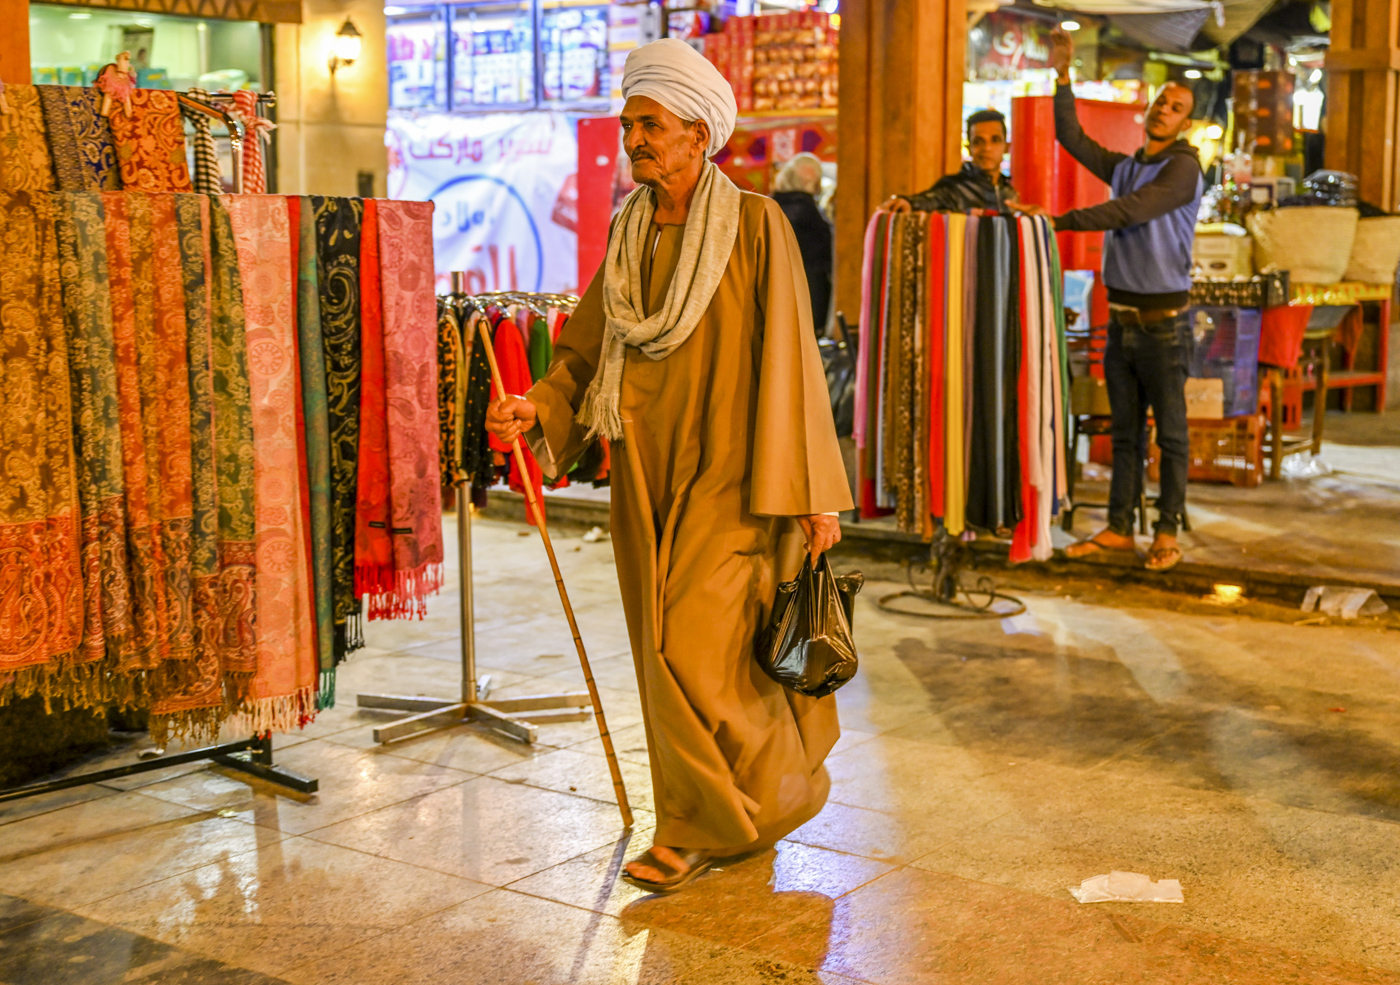 At a Street Market in Egypt by Pinaki Sarkar